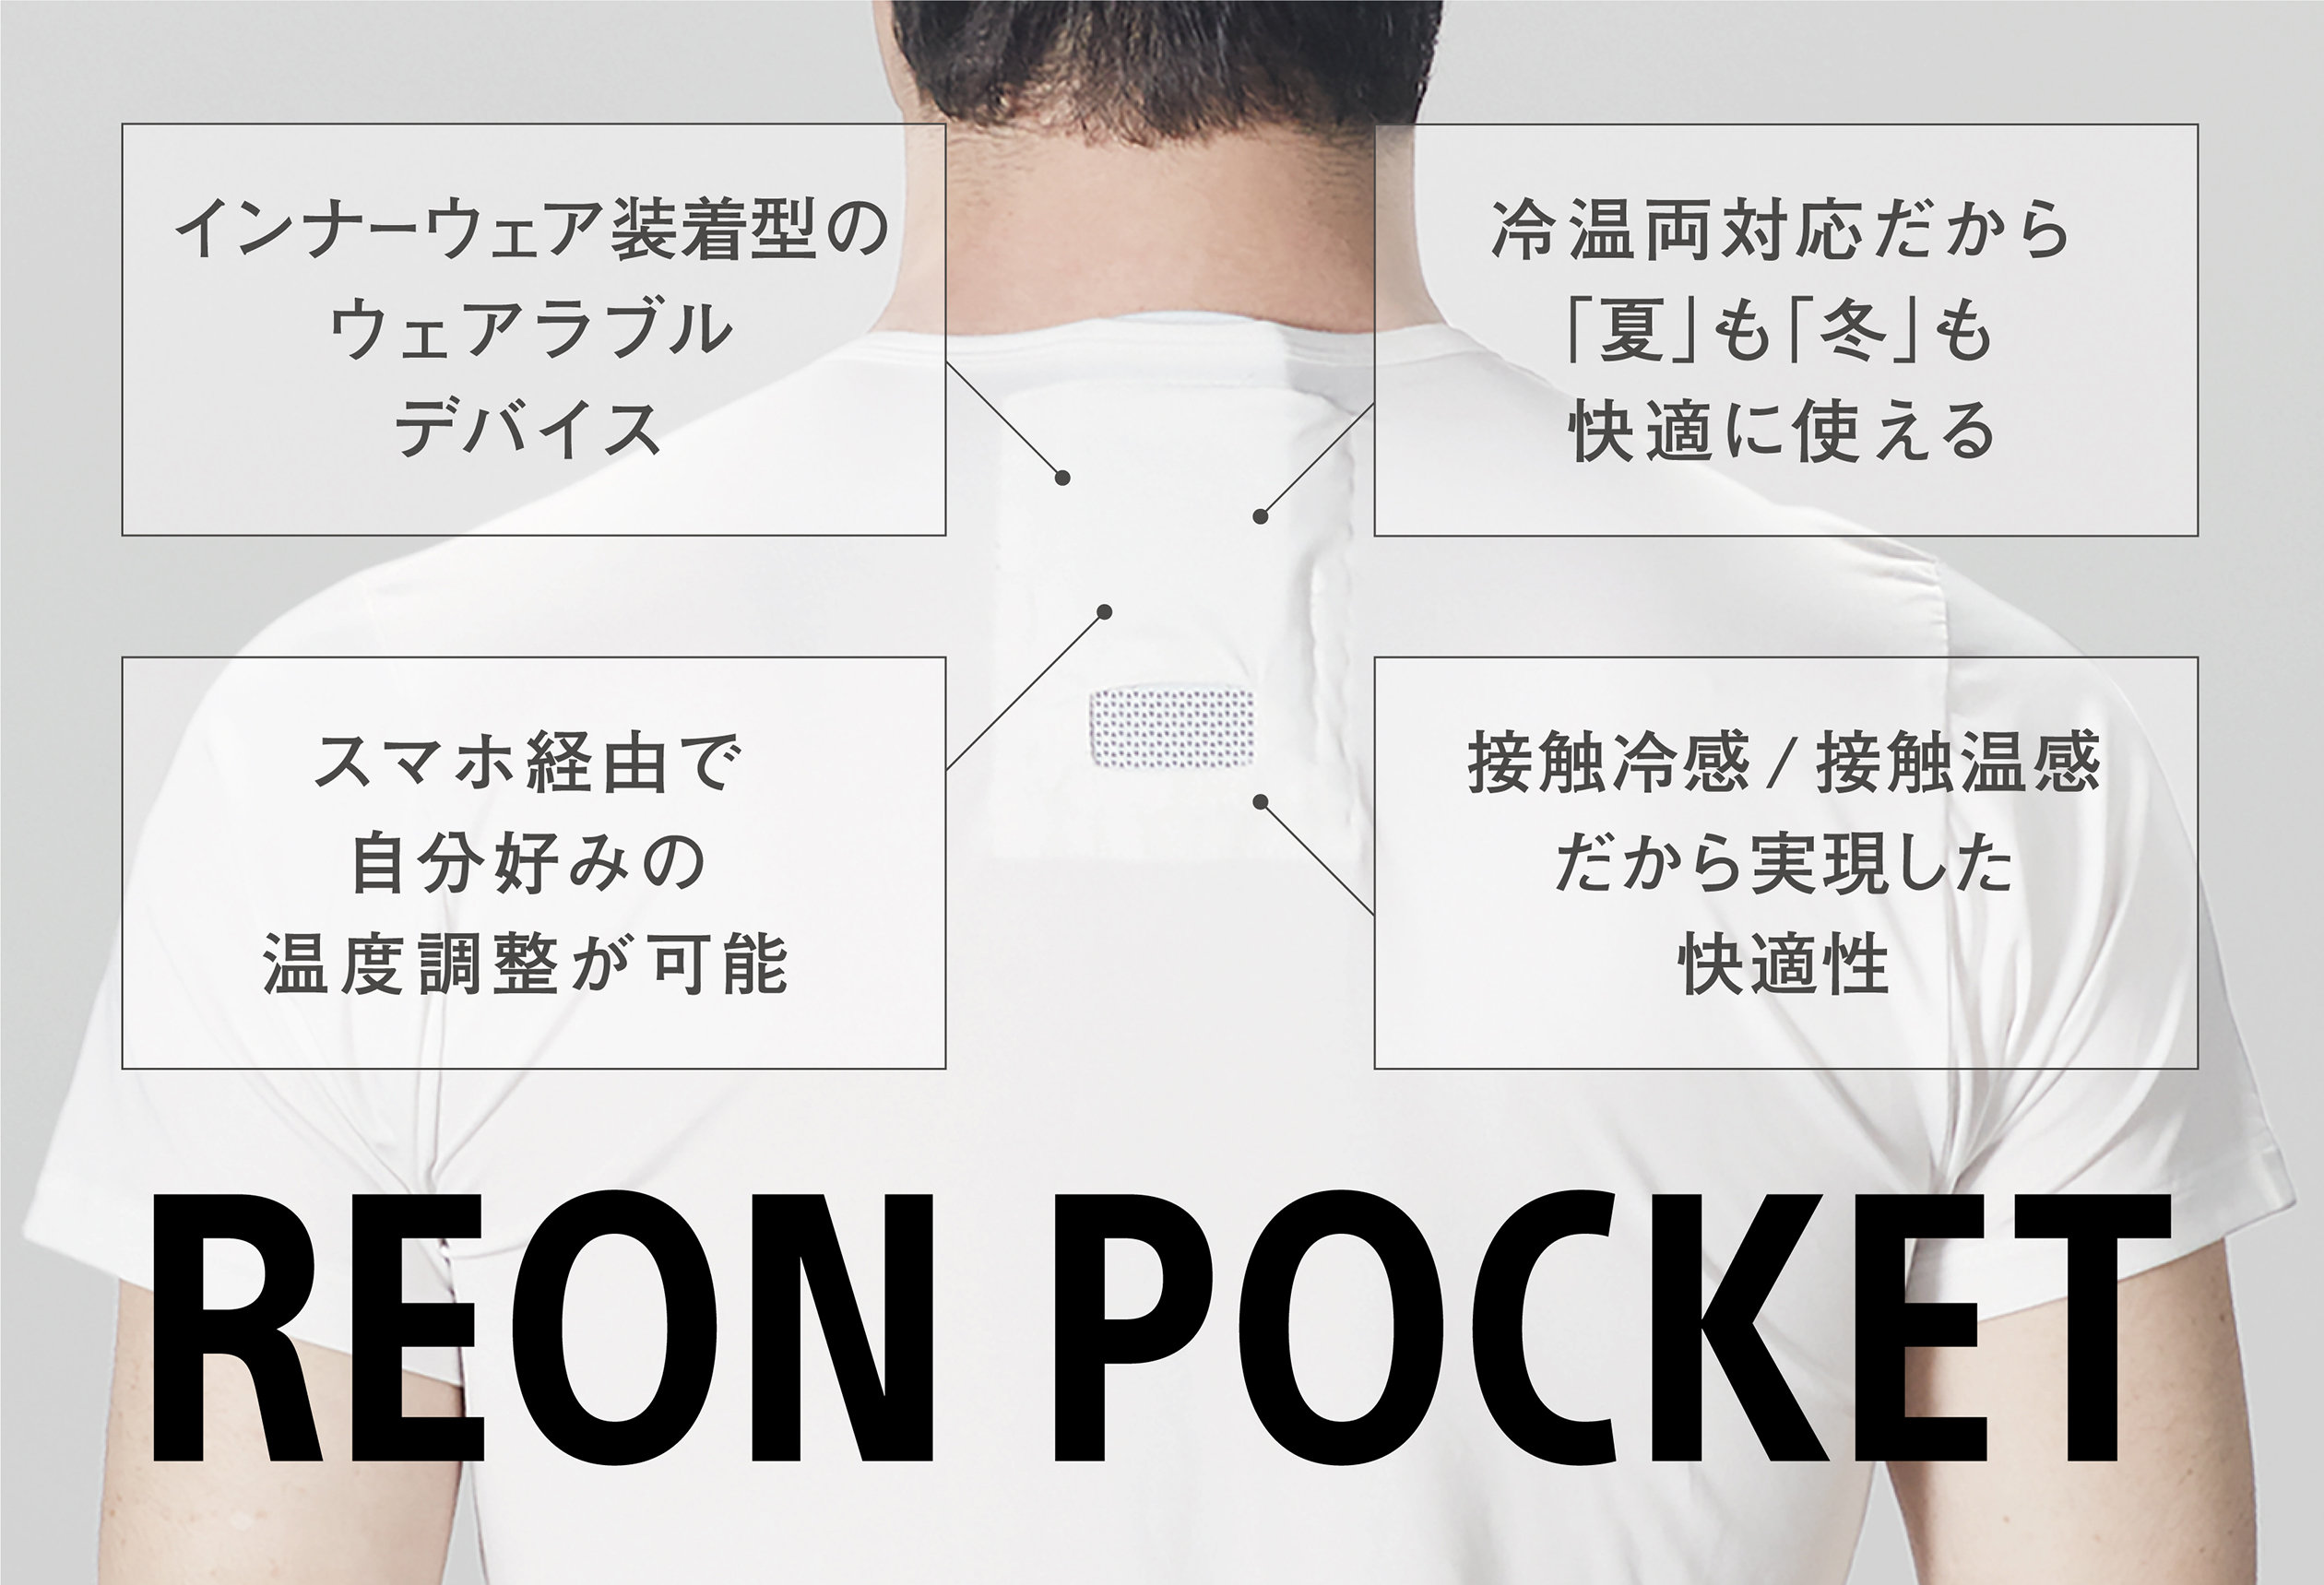 Sony 的「穿戴式空調」Reon Pocket 集資中！能降溫 13 度防熱浪，天氣寒冷還可當暖爐